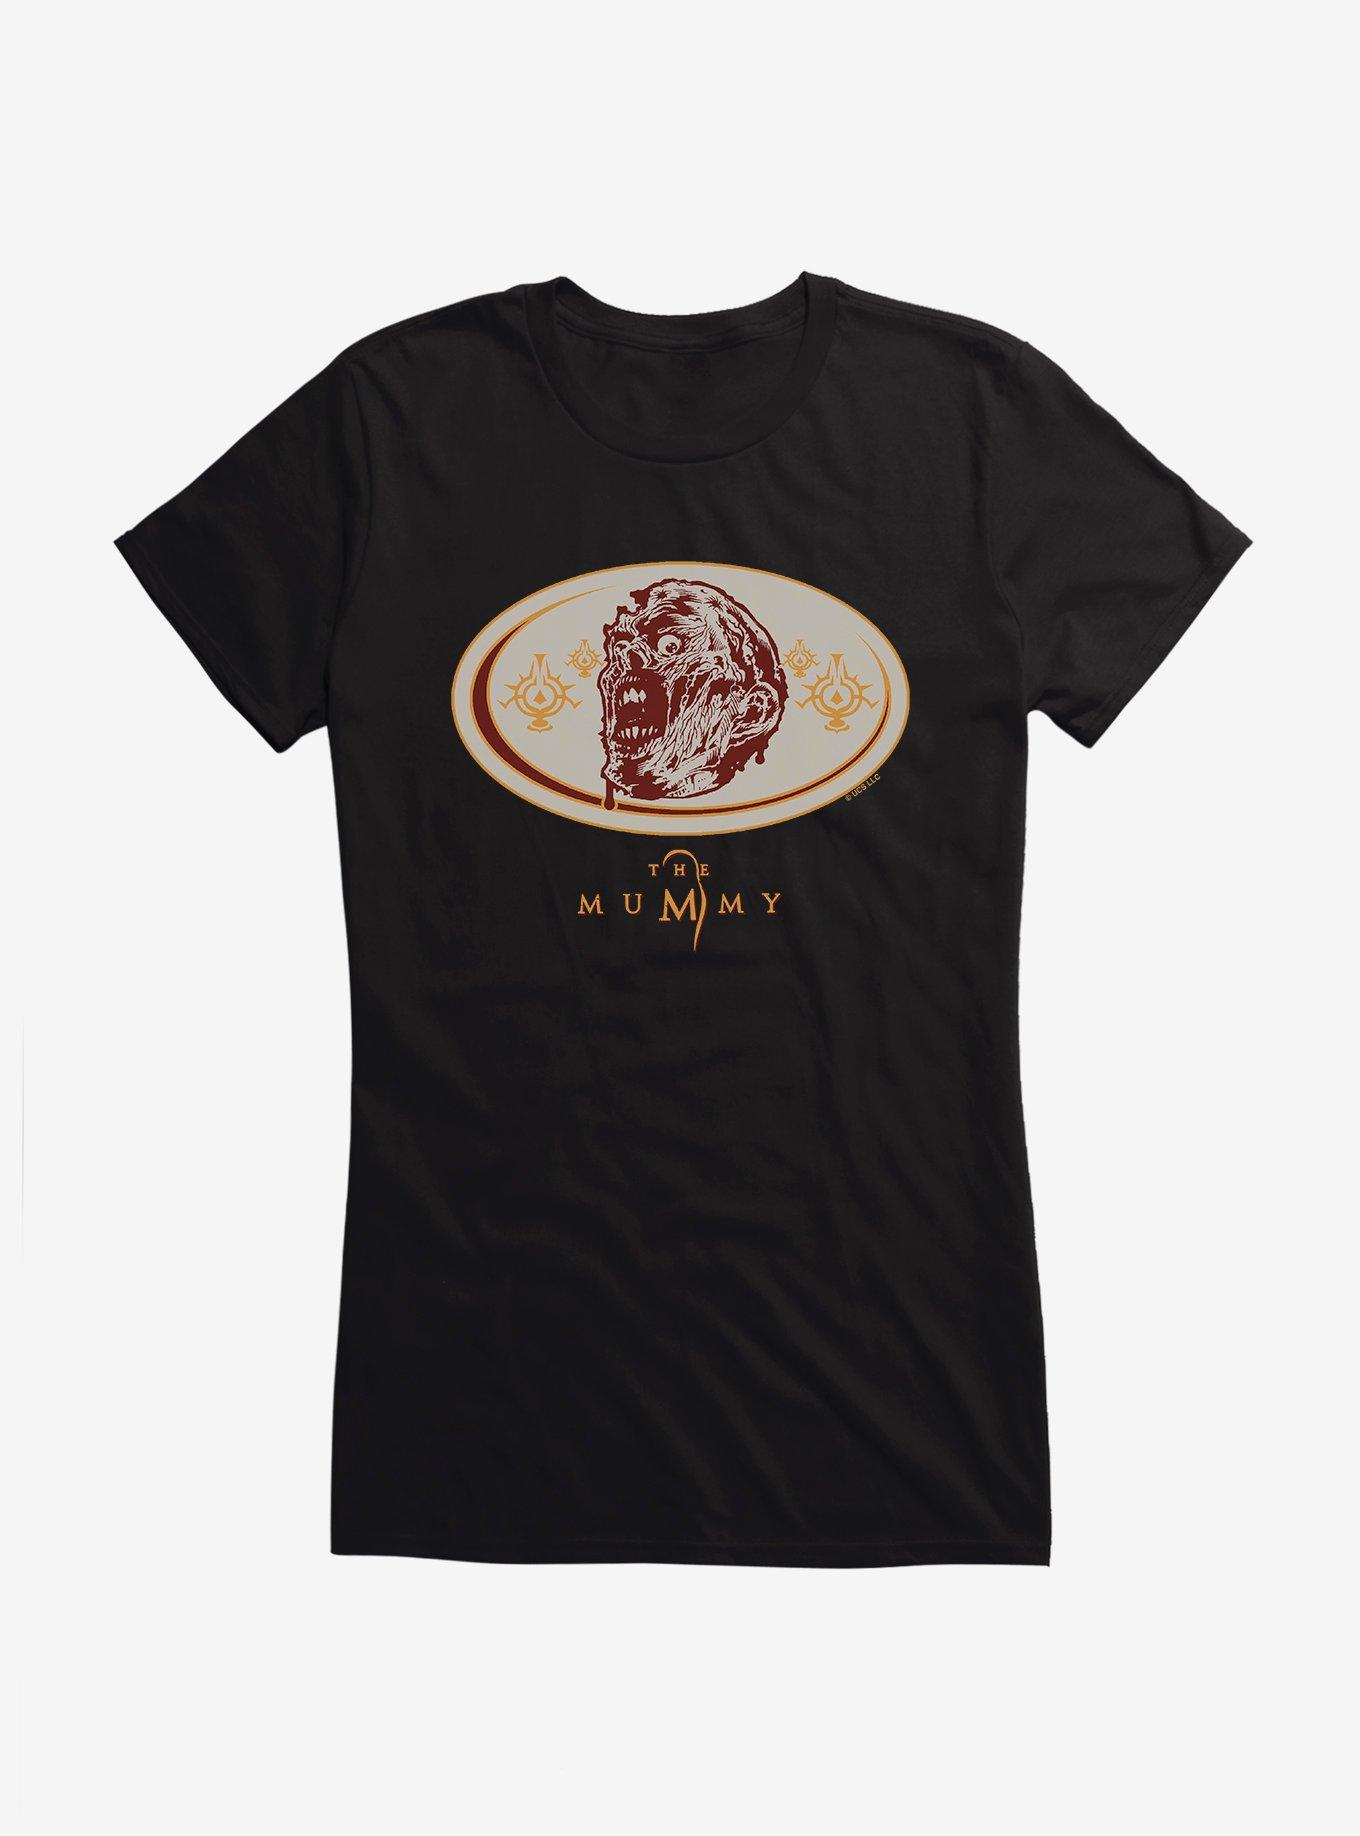 The Mummy Scarab Graphic Girls T-Shirt